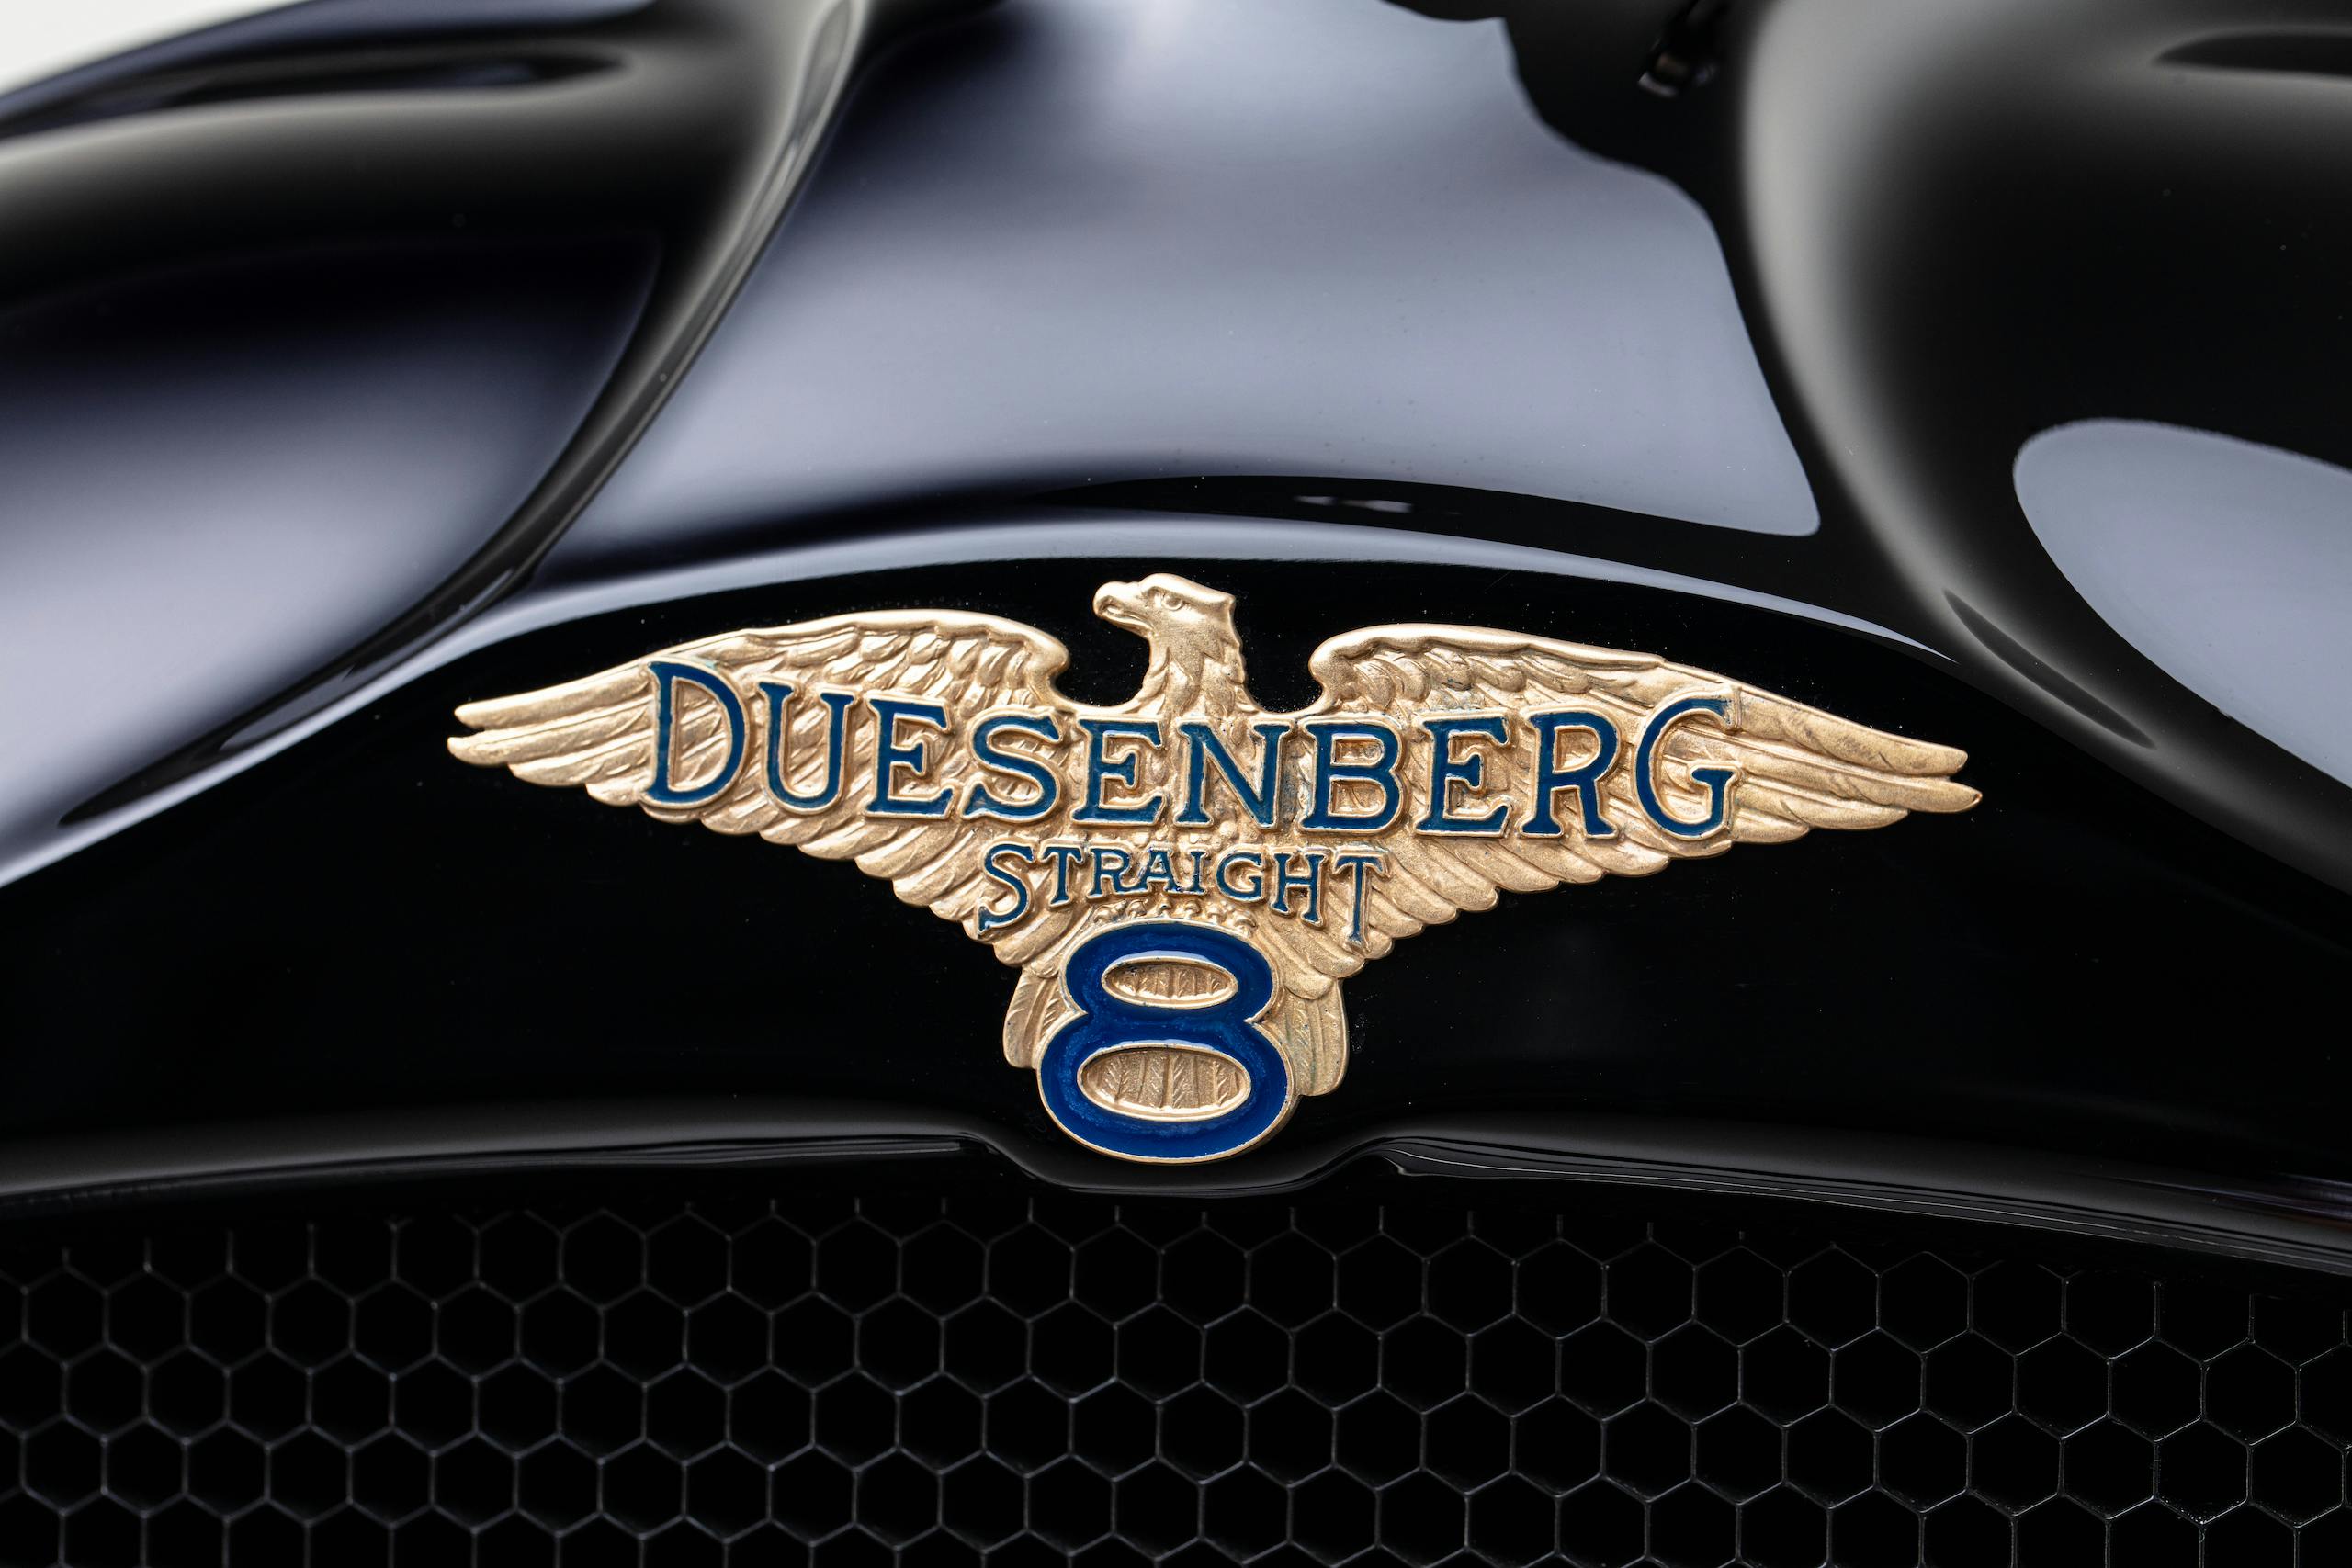 Duesenberg straight eight logo icon ornament close